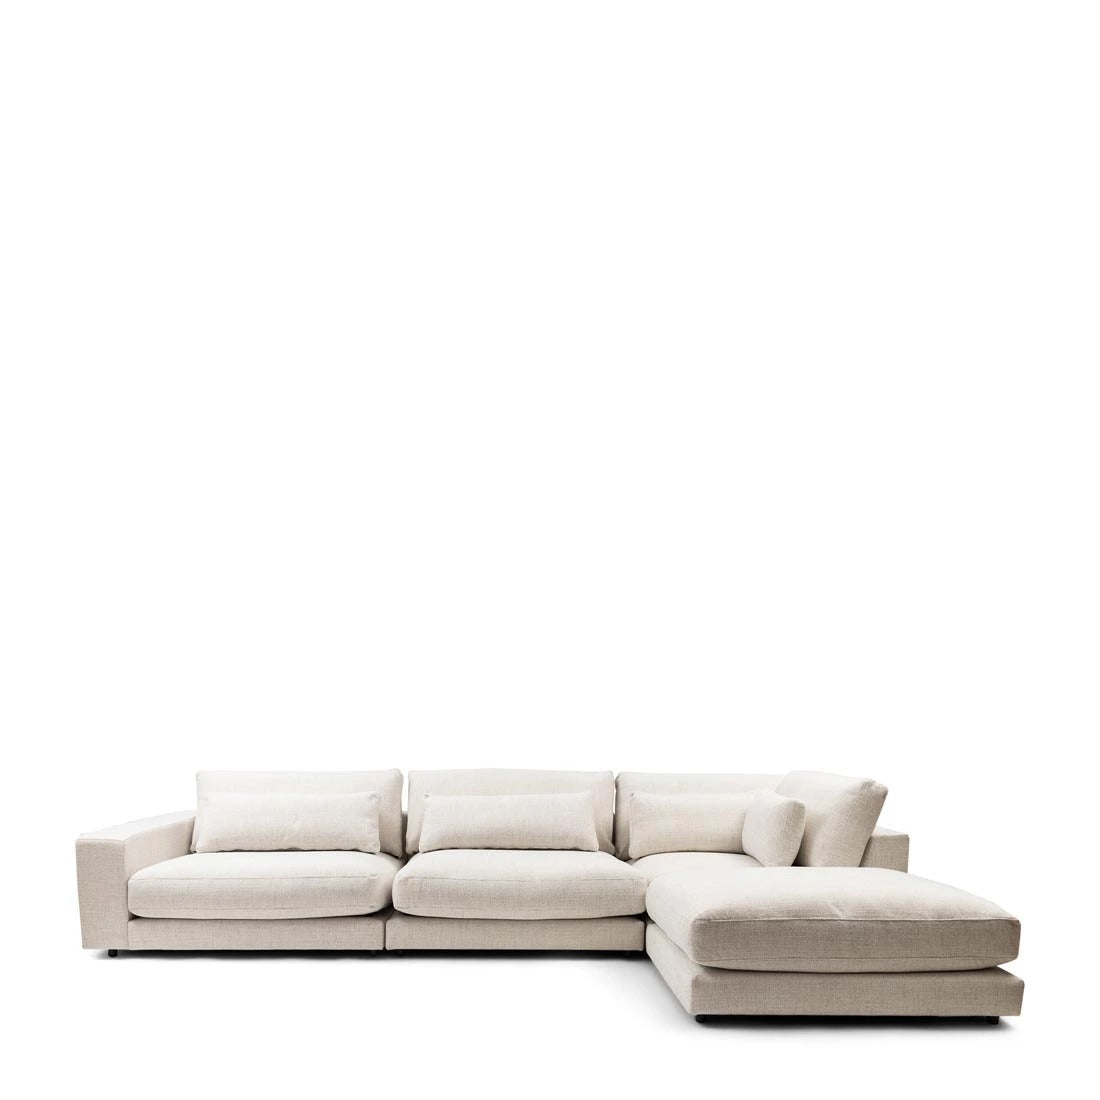 STEPHEN modular sofa - center section